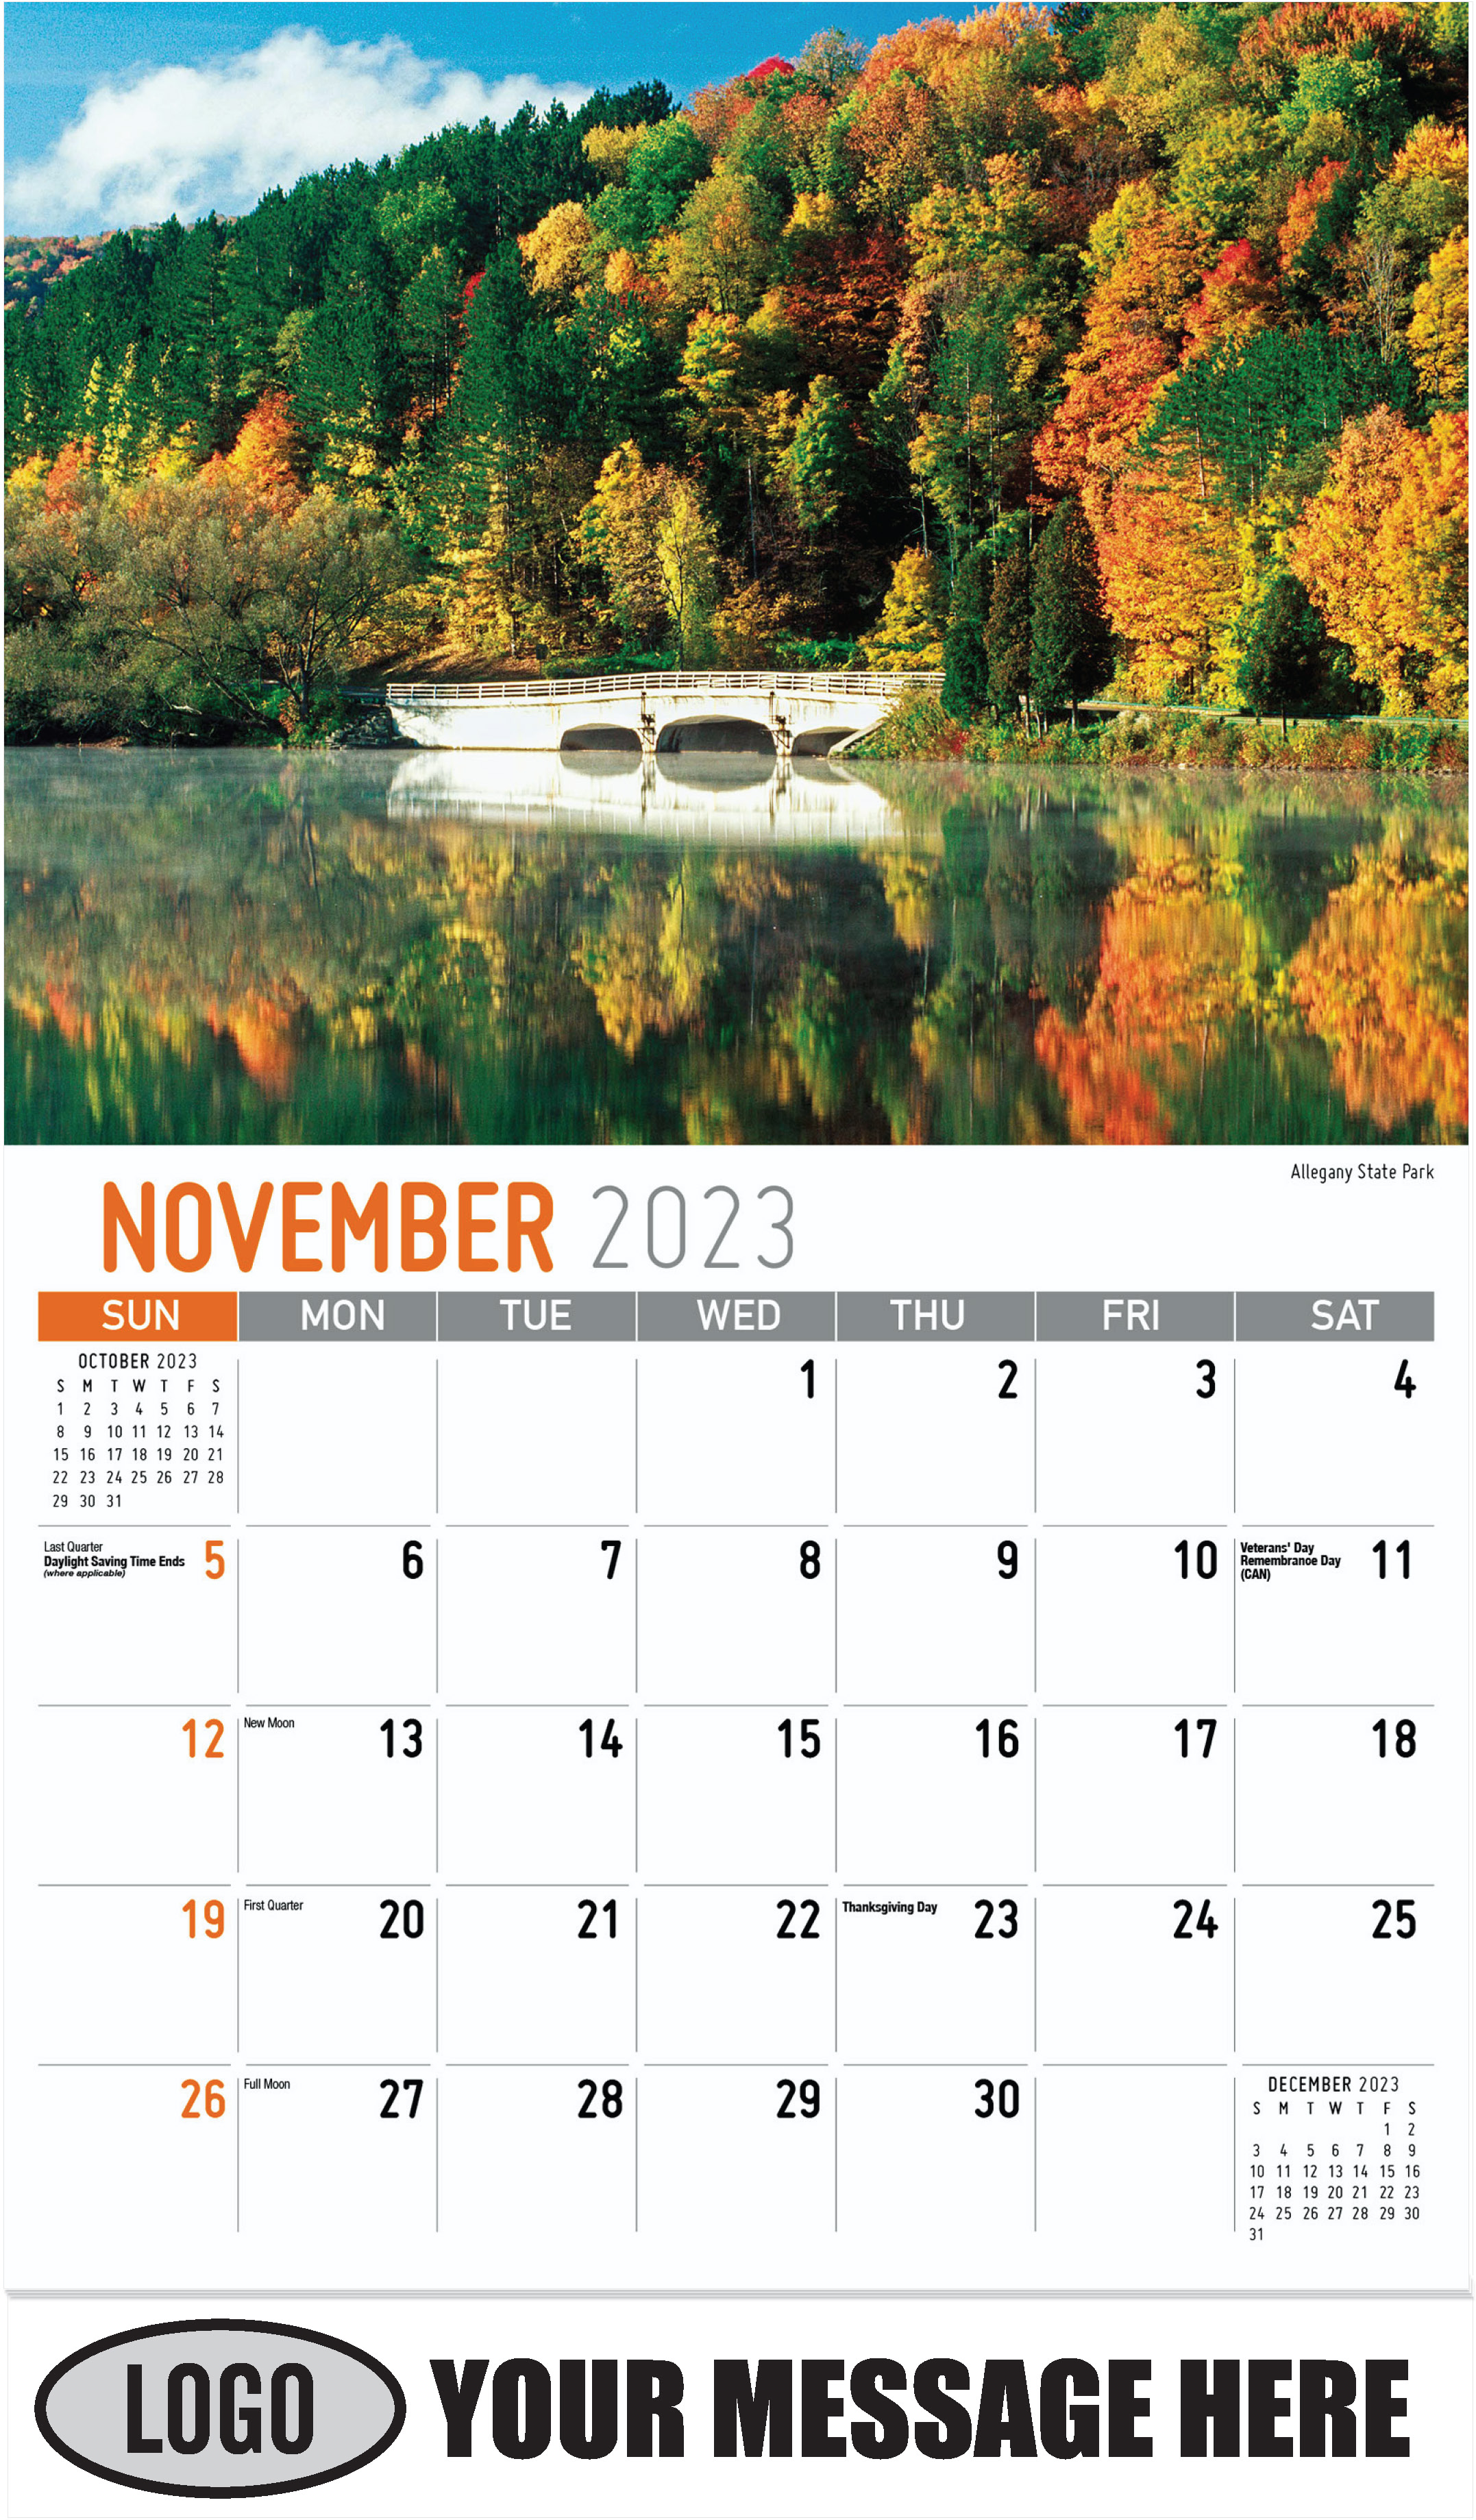 Allegany State Park - November - Scenes of New York 2023 Promotional Calendar